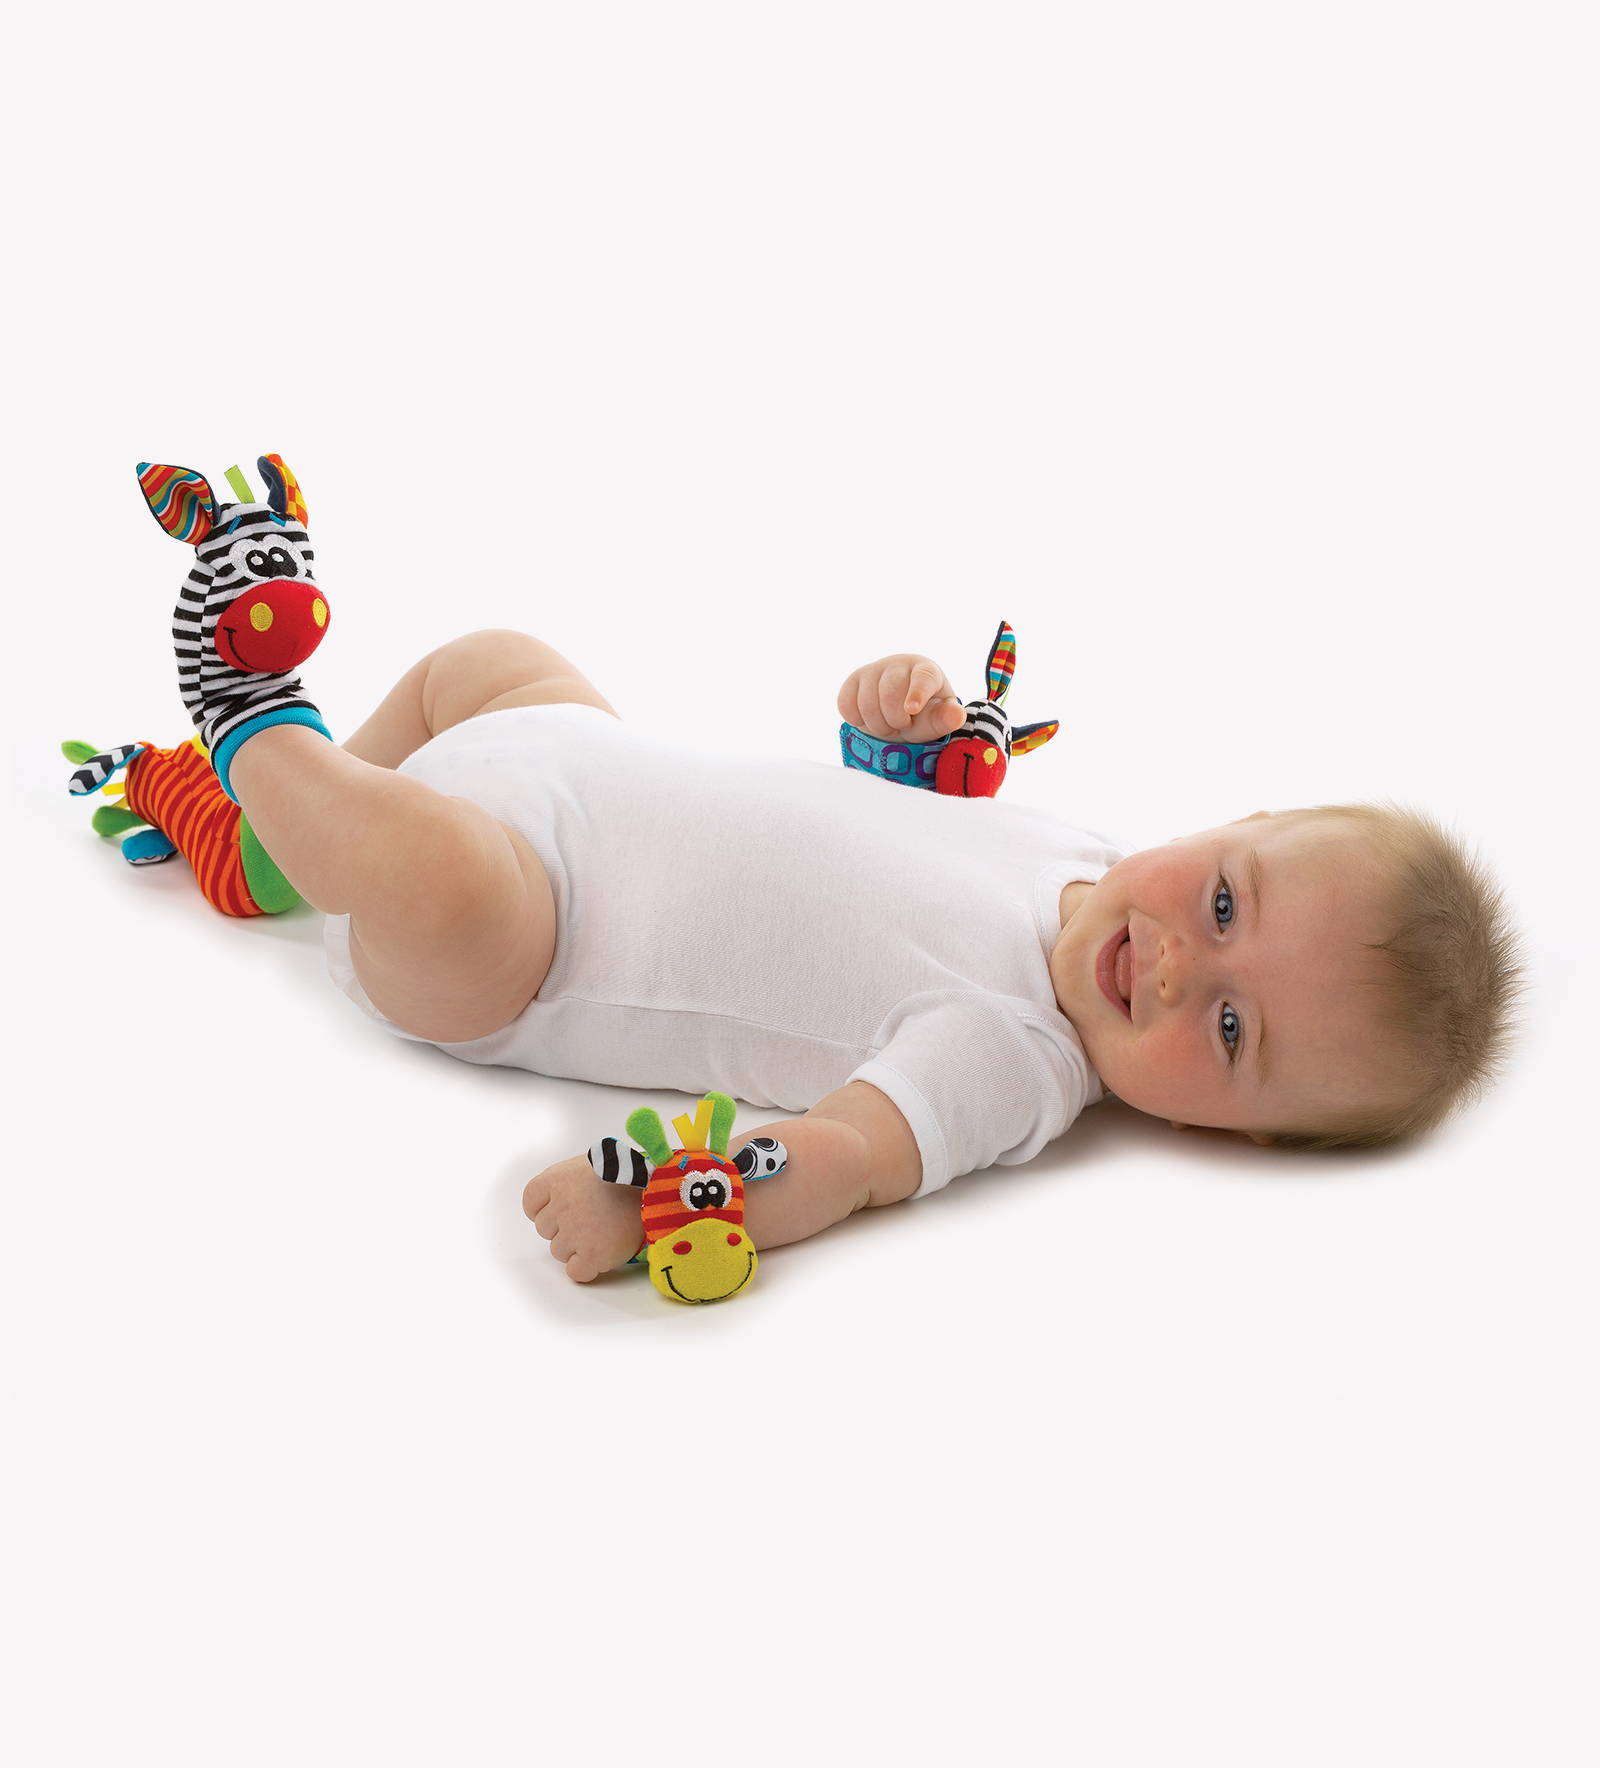 Poignet Hochets Foot Finder Rattle Sock Baby Toddlor Jouet, hochet